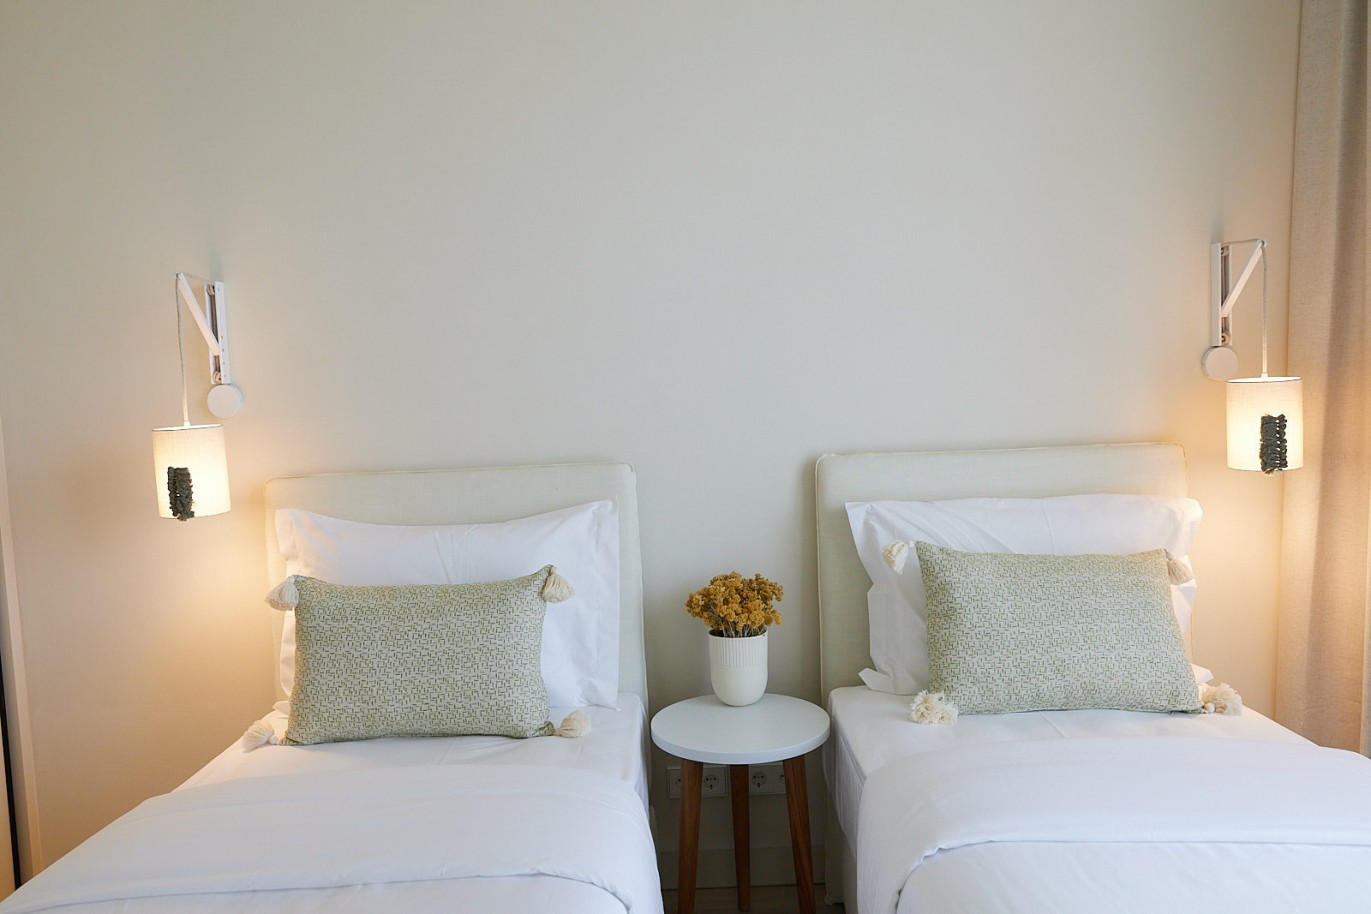 2 bedroom apartment in resort, for sale in Porches, Algarve_230576